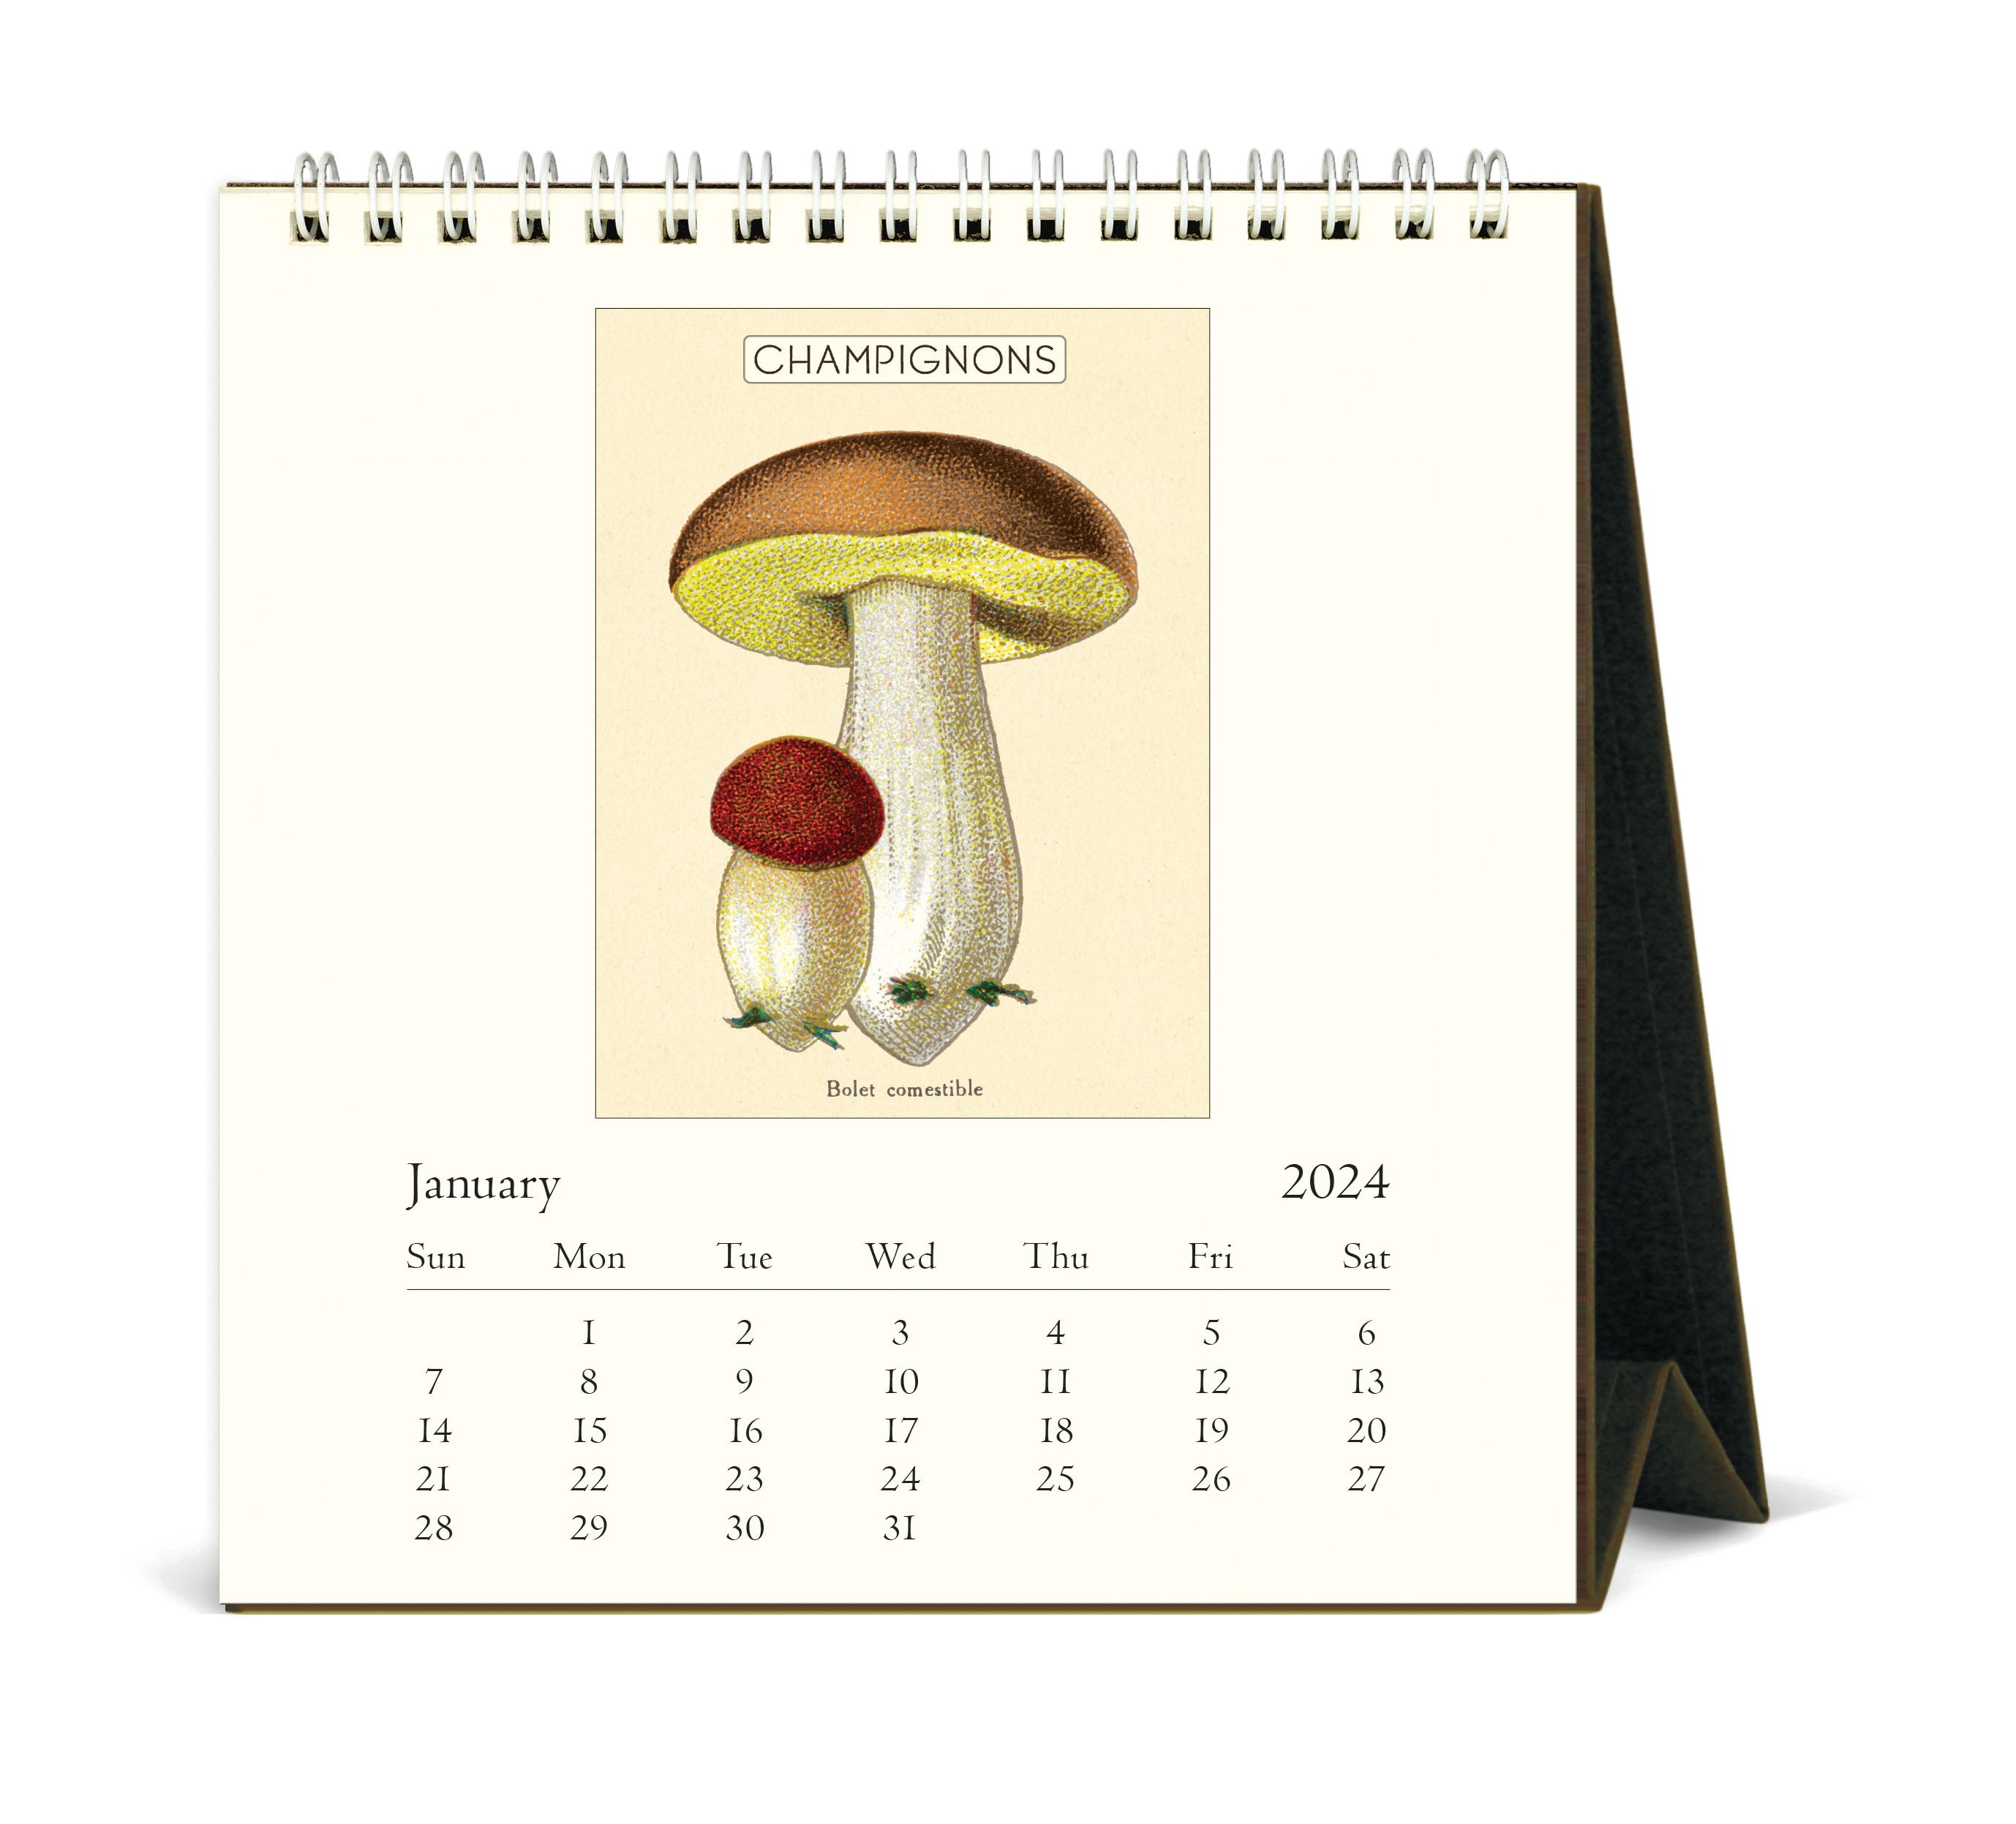 Mushrooms Desk Calendar